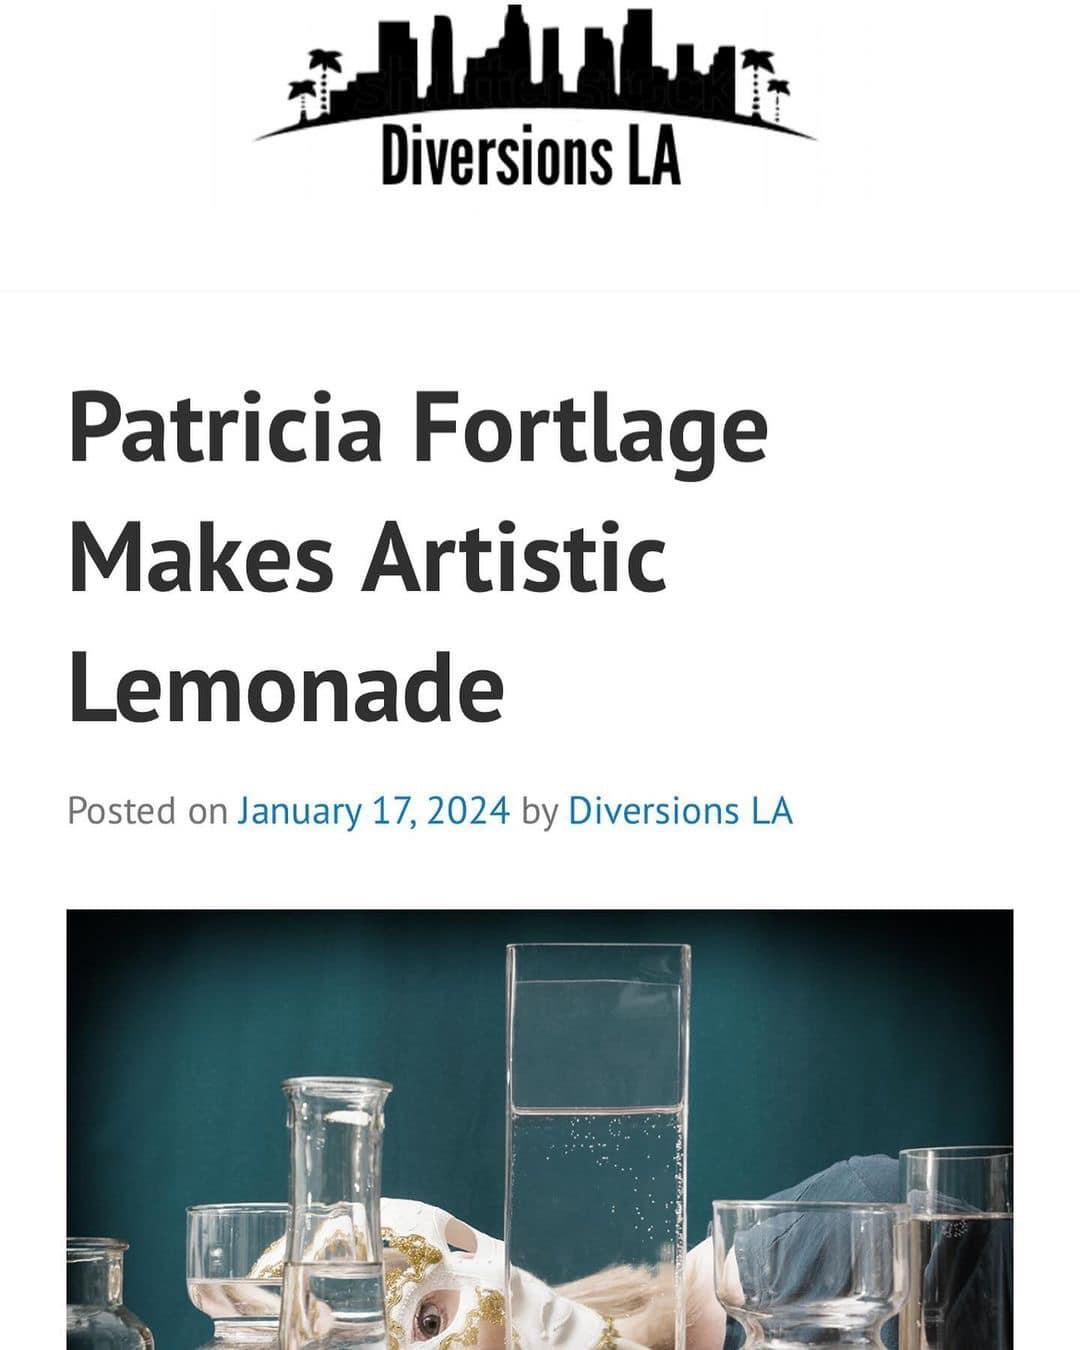 "Patricia Fortlage Makes Artistic Lemonade"